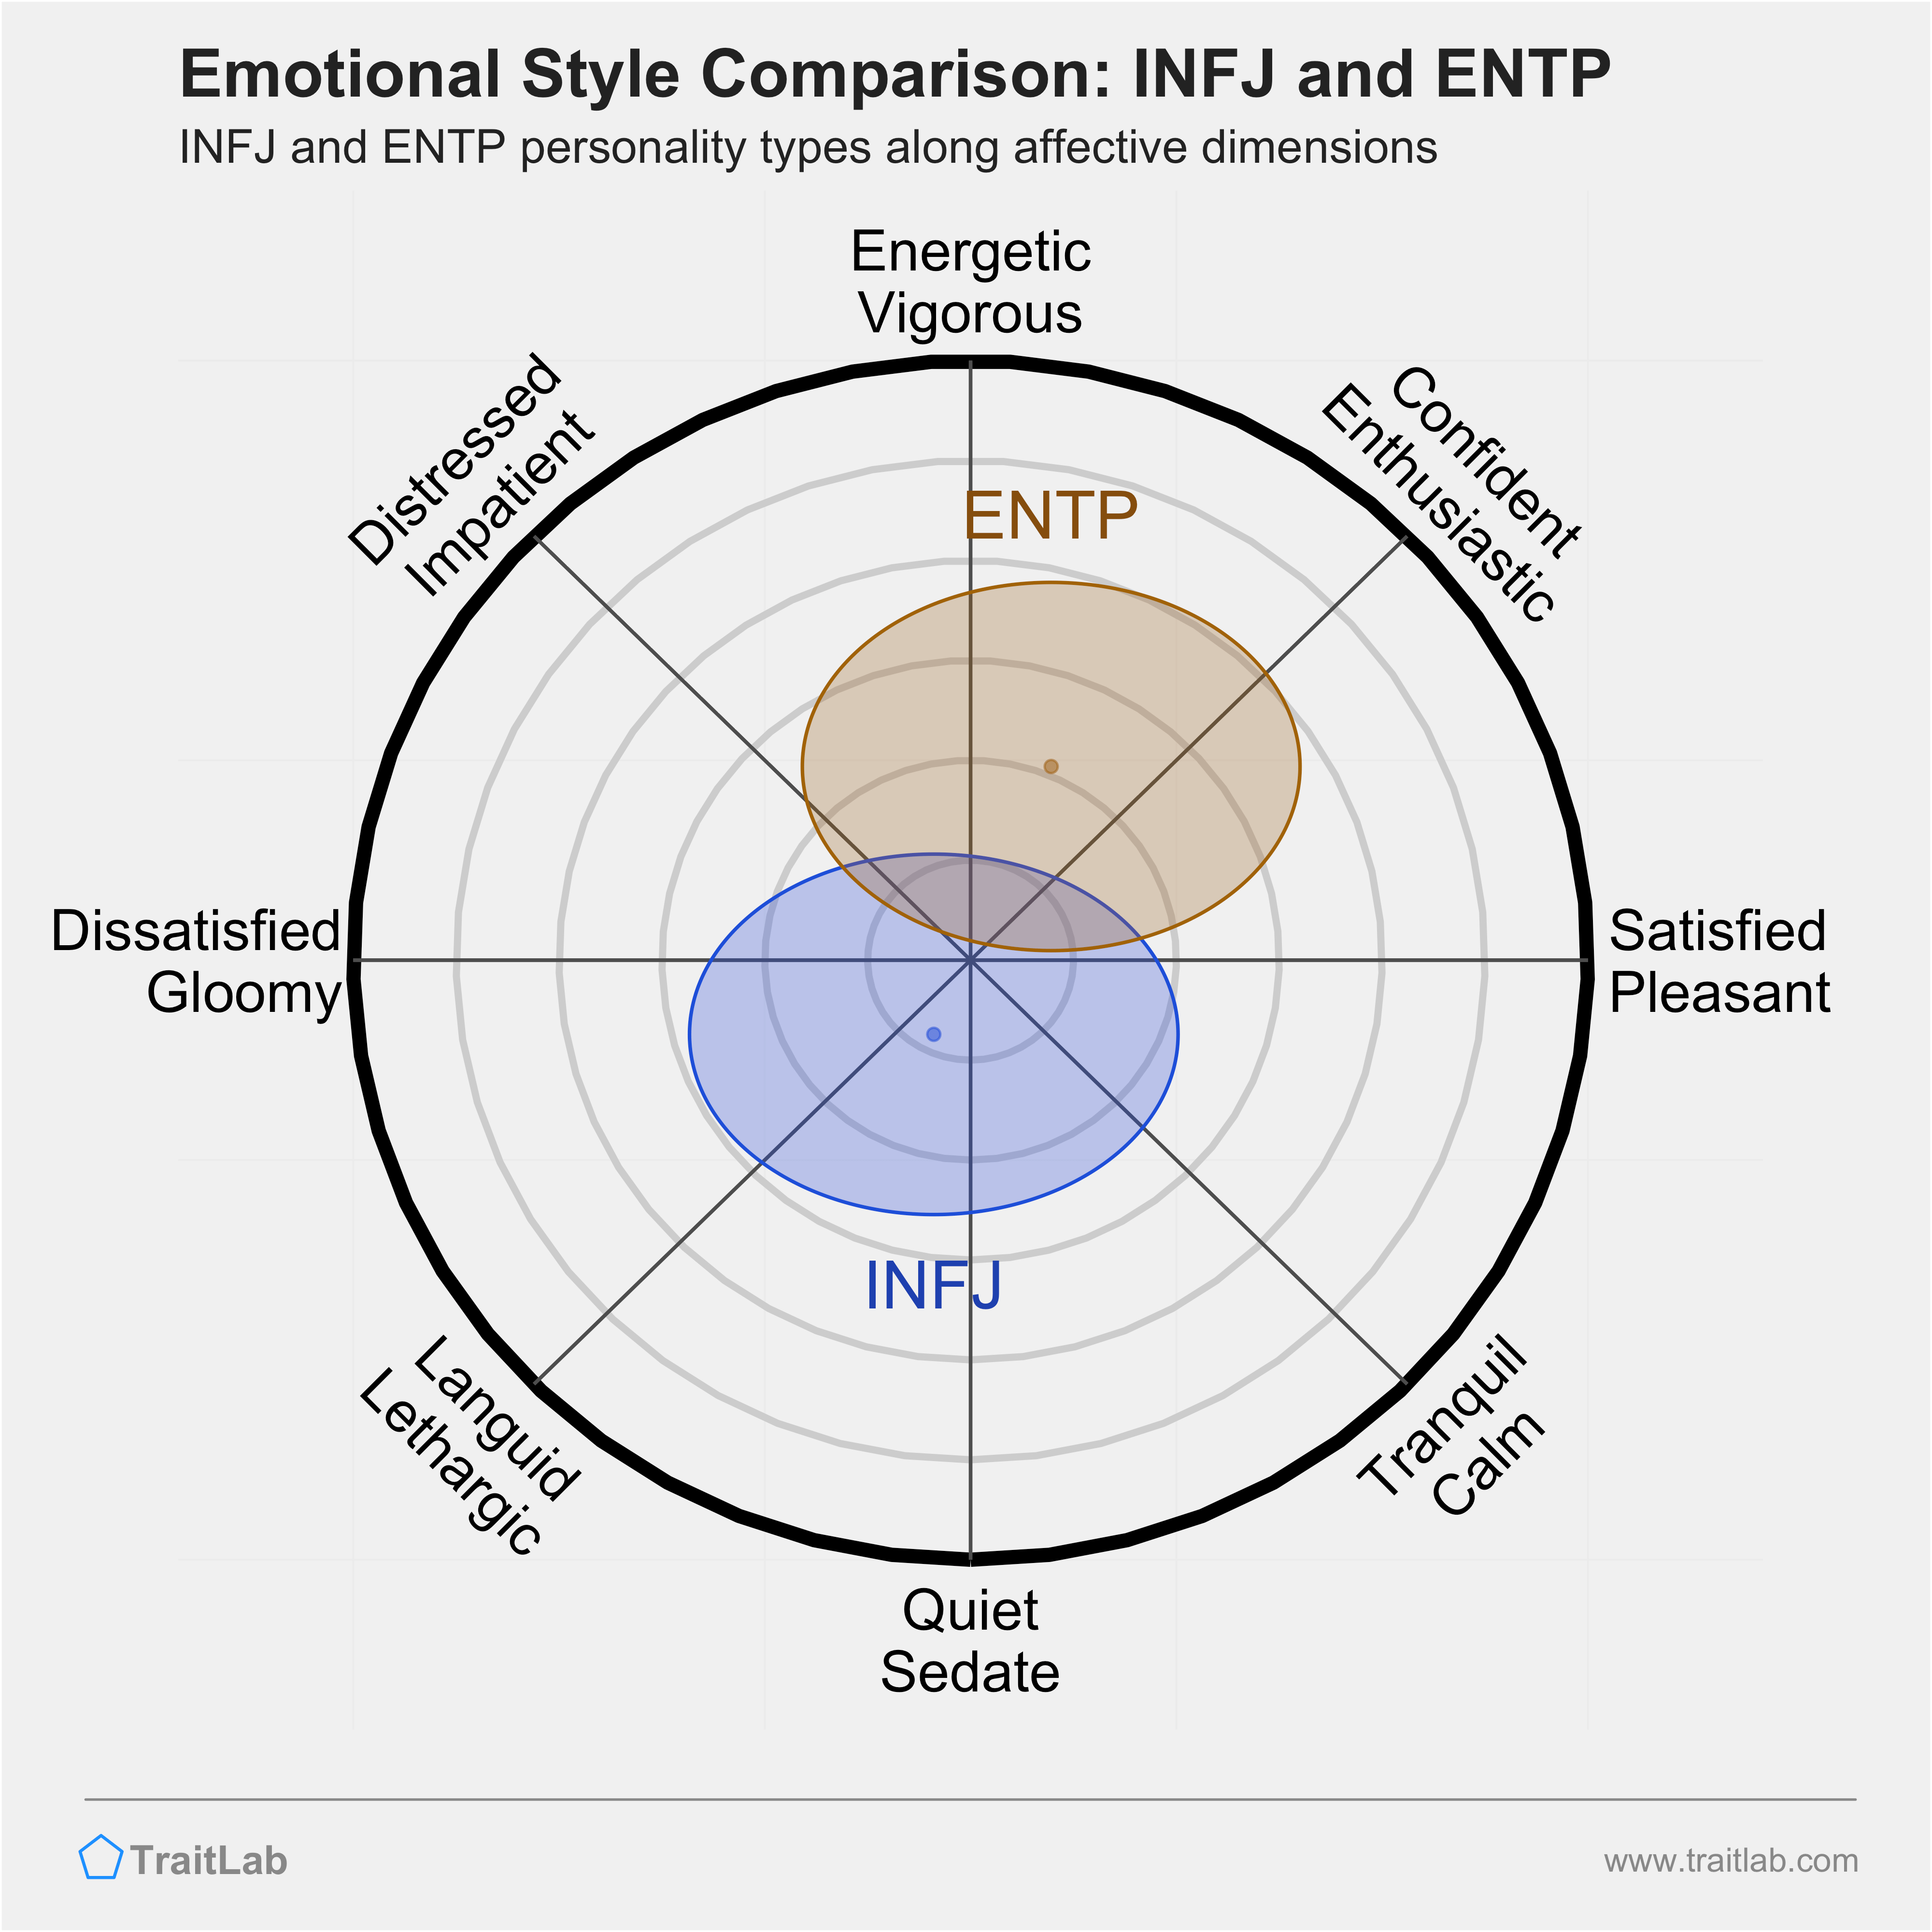 INFJ and ENTP comparison across emotional (affective) dimensions